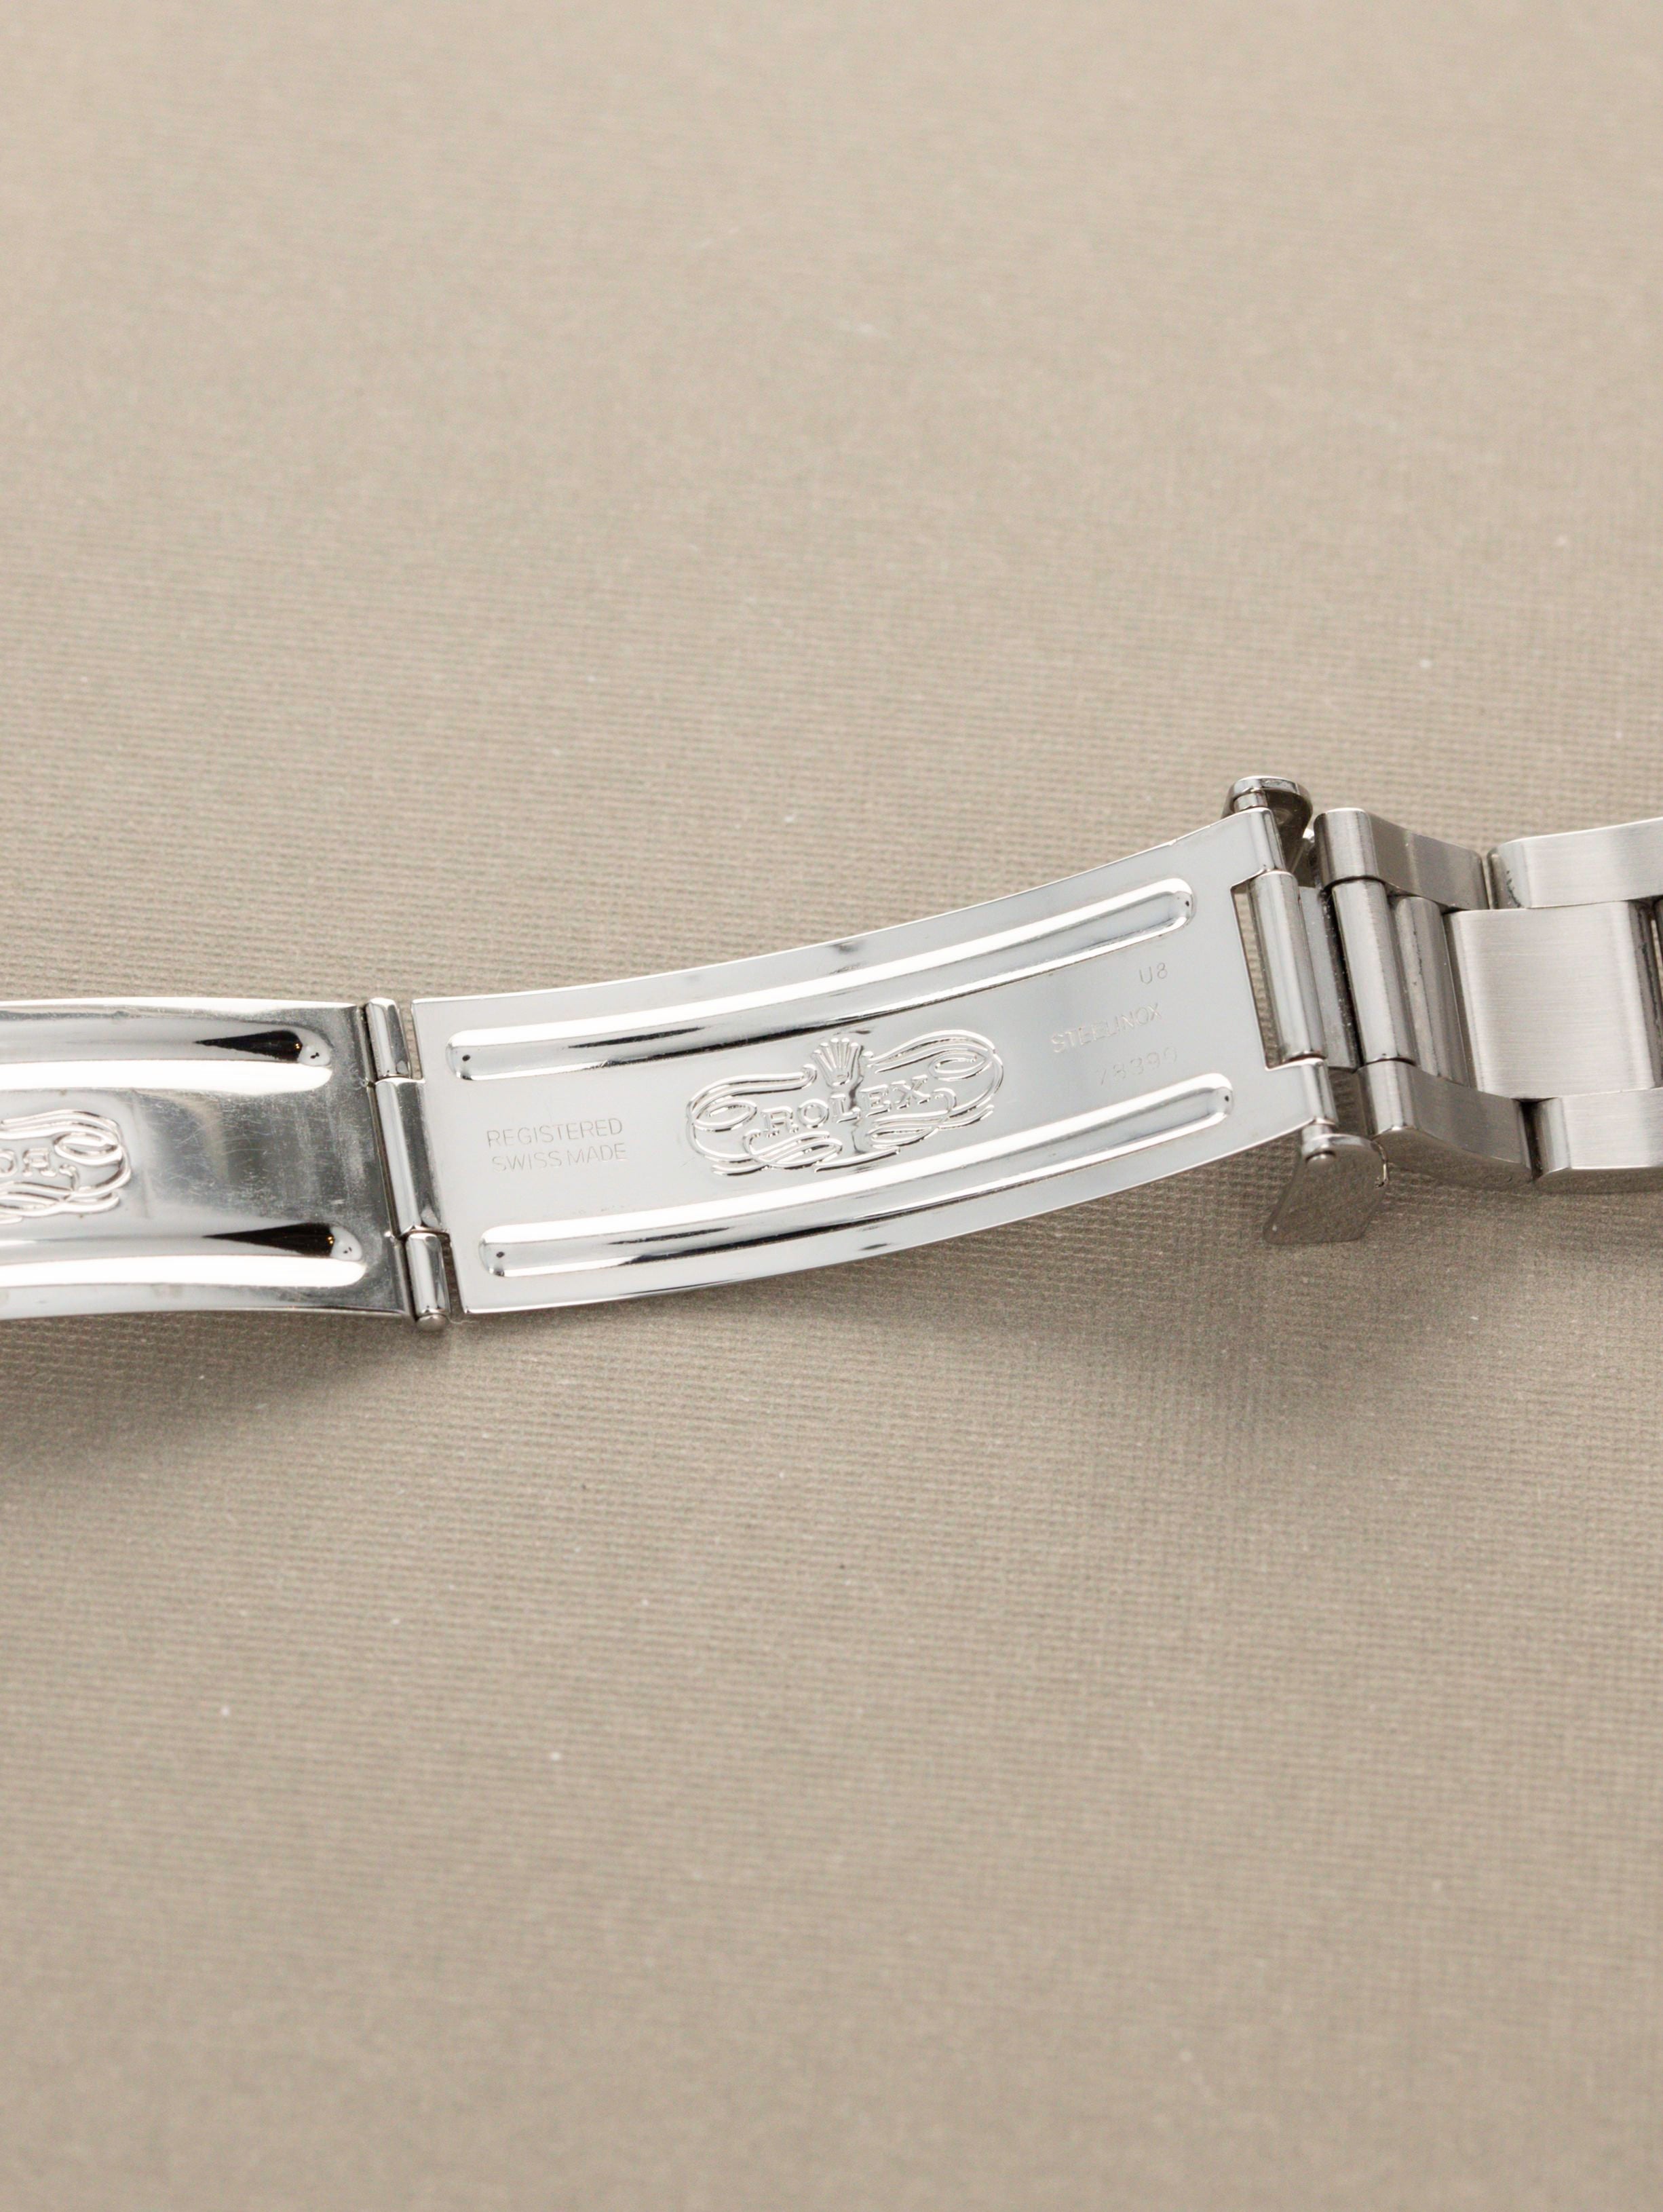 Rolex 'Cosmograph' Daytona - Ref. 16520 'U' Serial